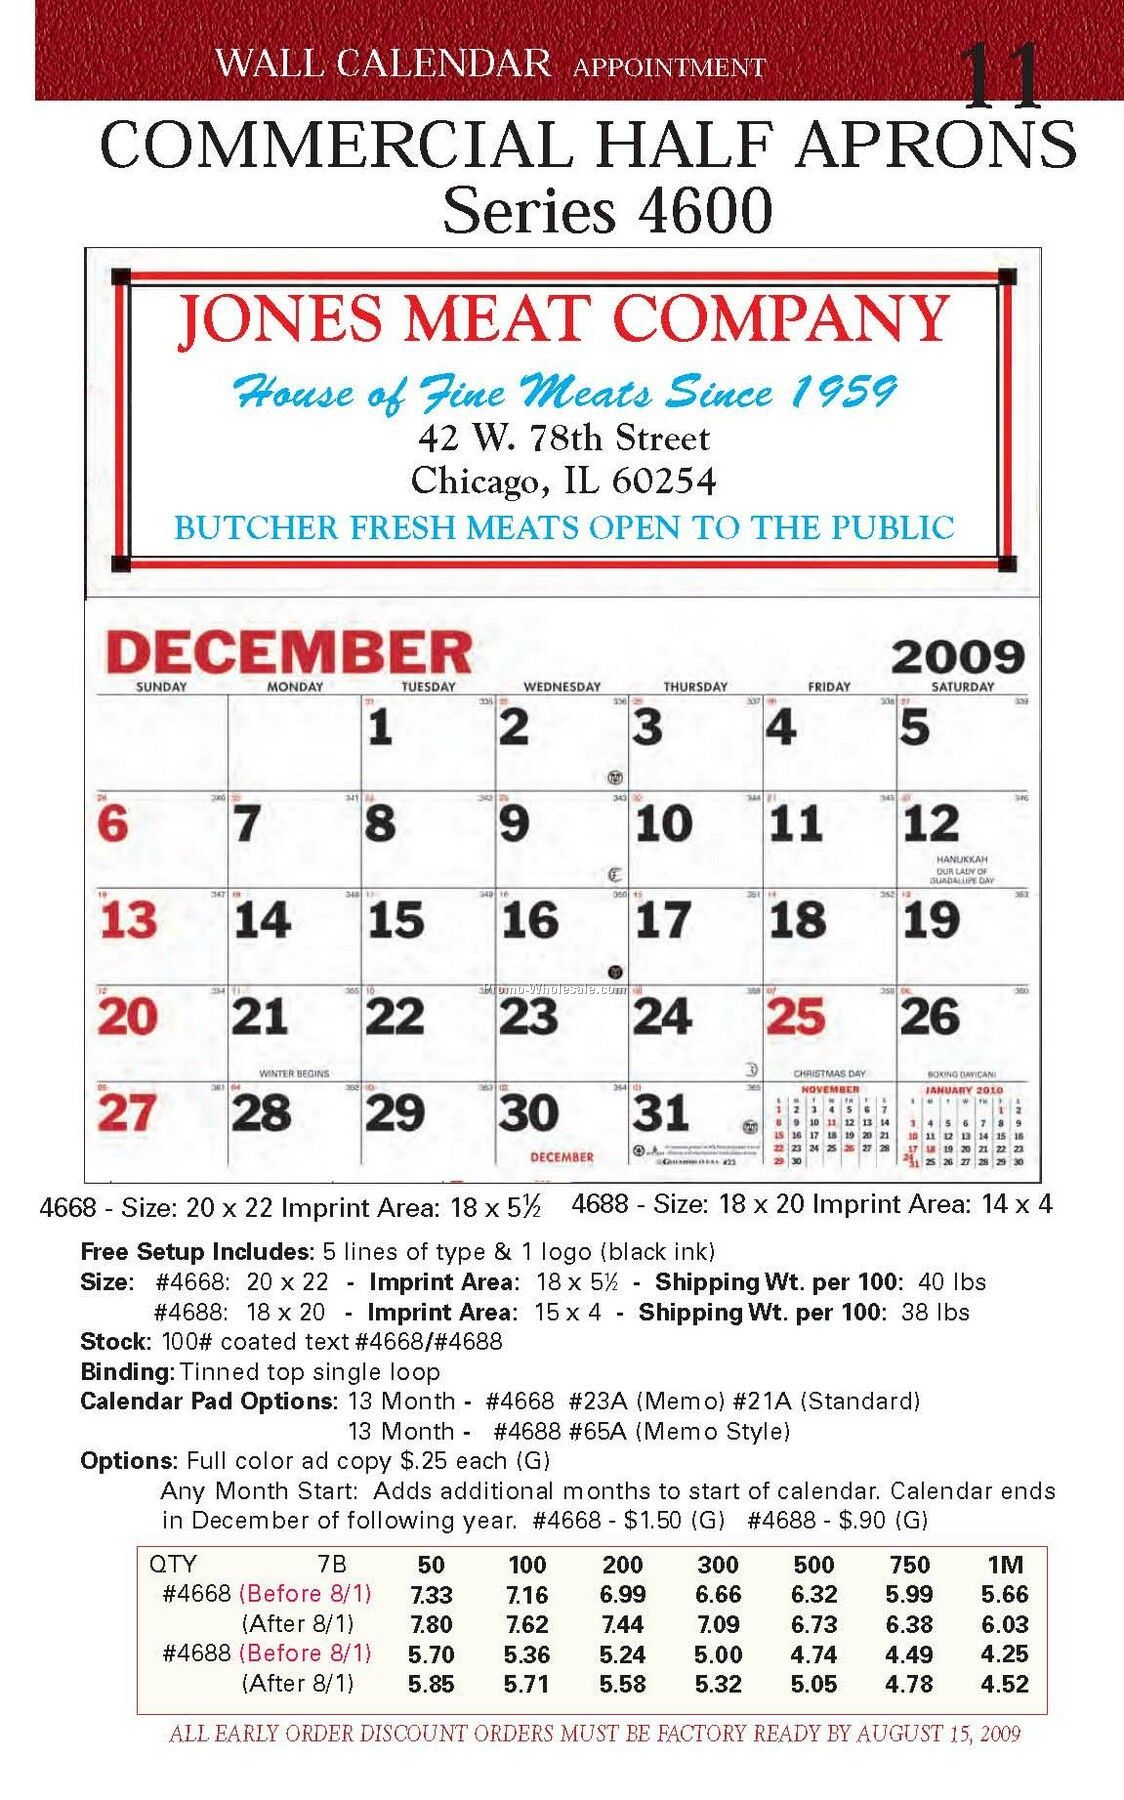 18"x20" Commercial Half Apron Appointment Calendar